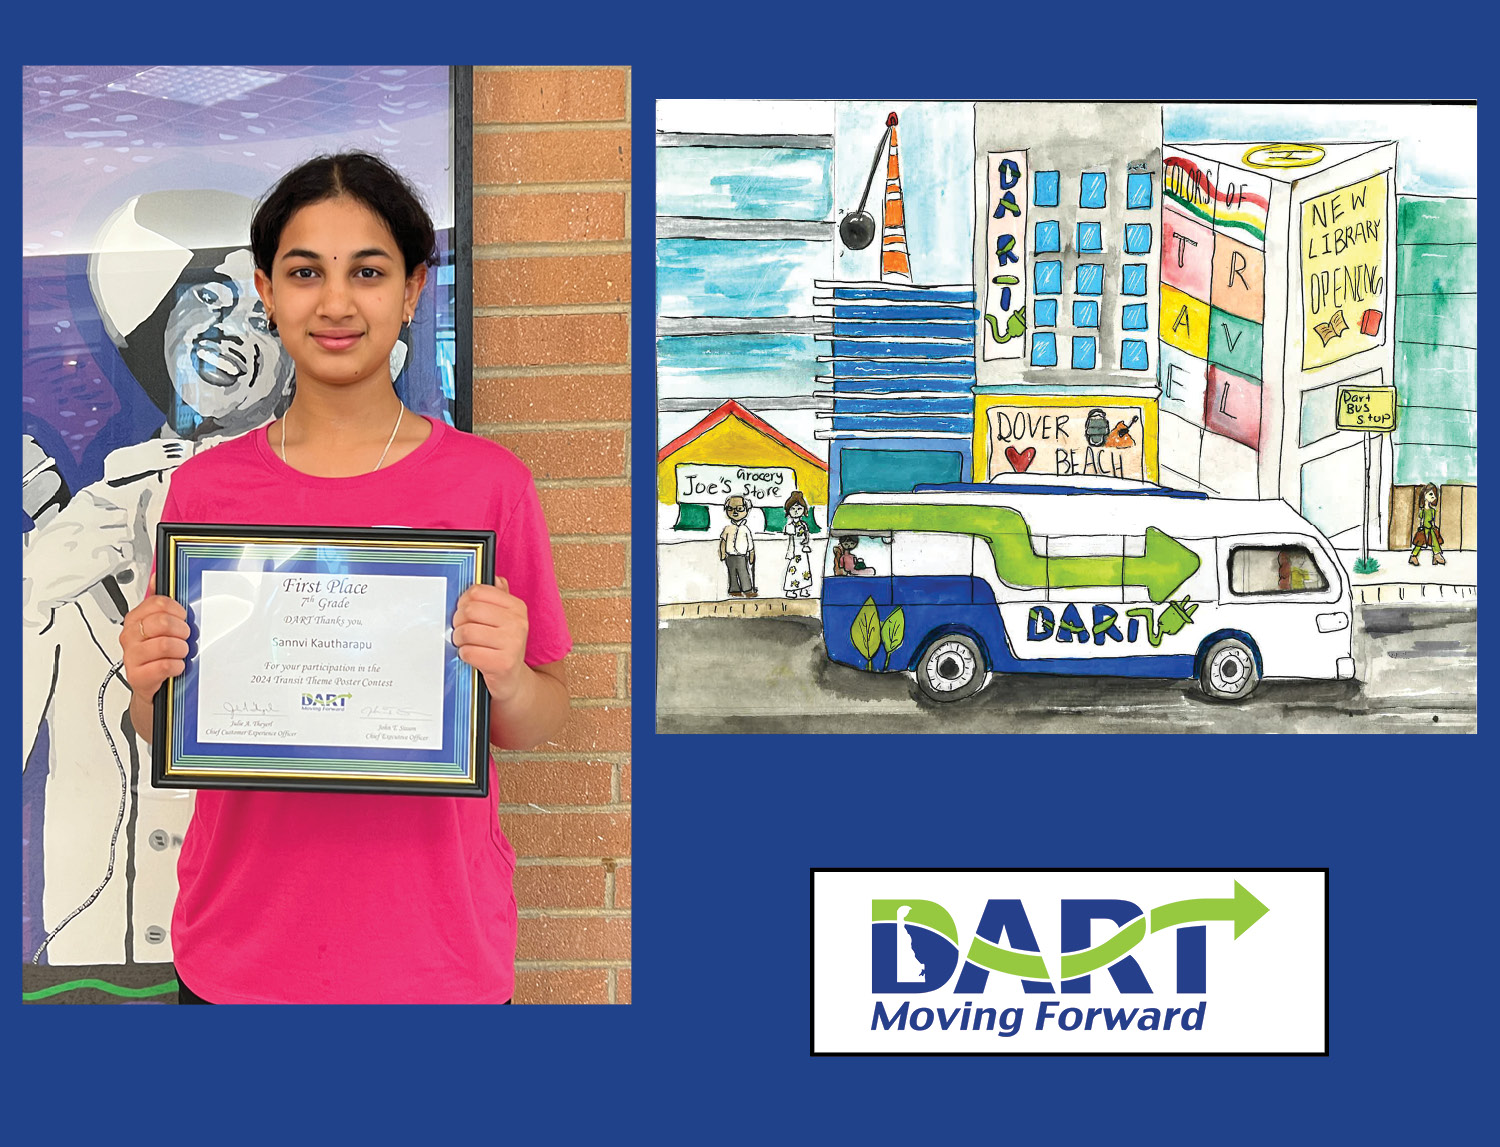 Dart Contest 7th Grade winner - Saanvi Kautharapu